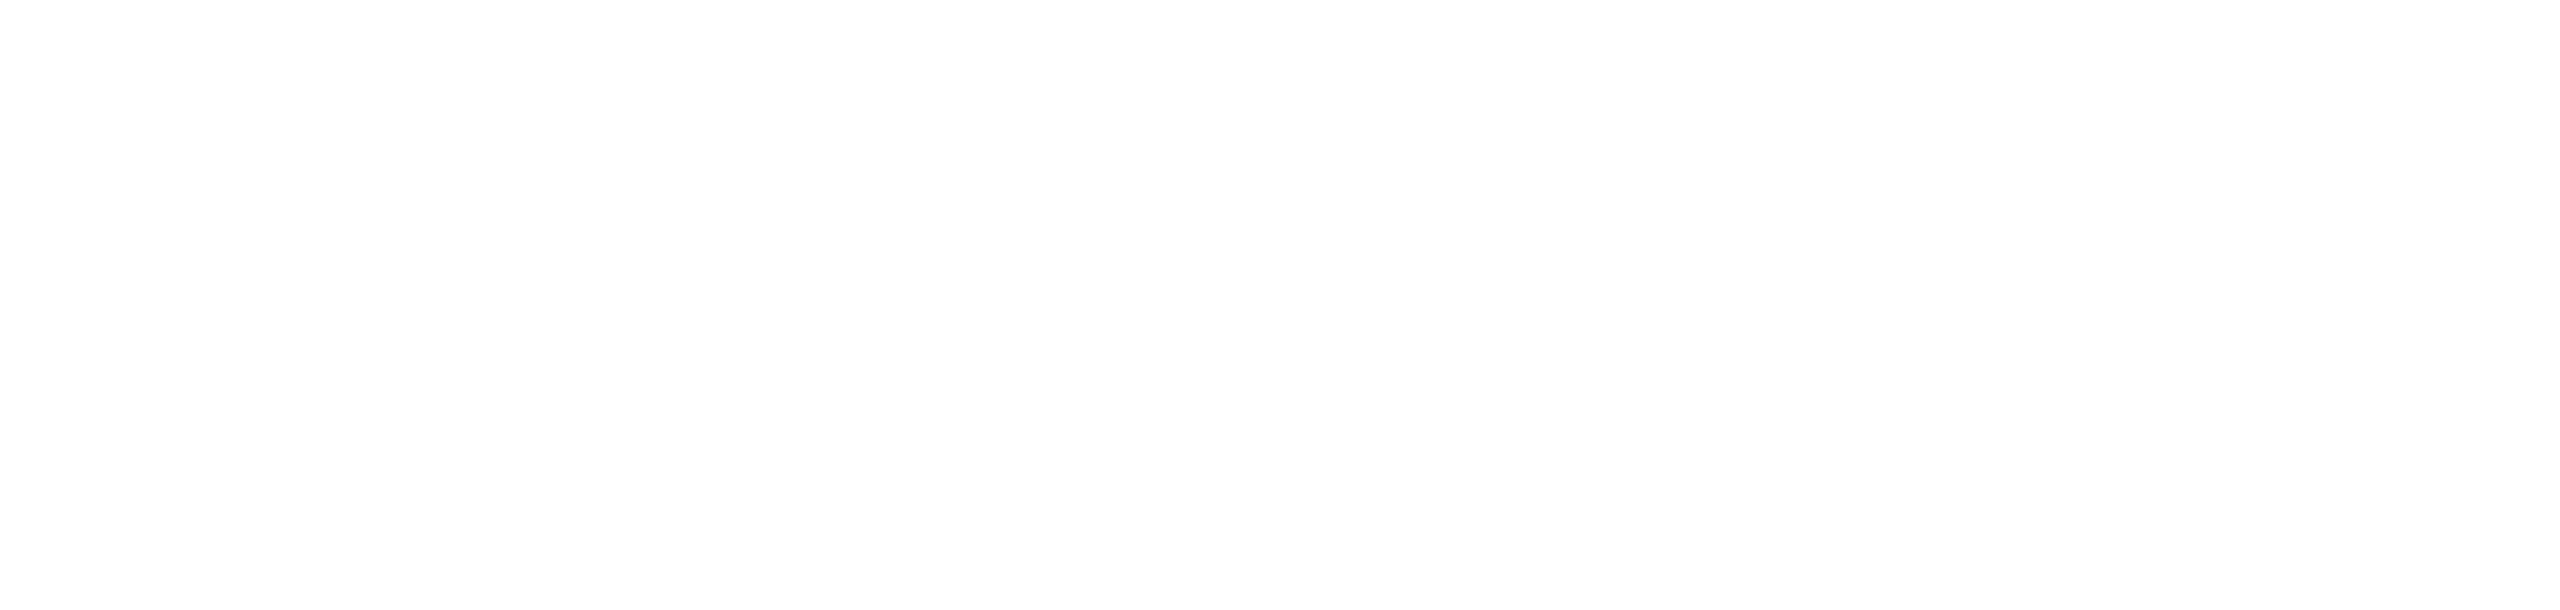 Locker's Southern View Luxury Motorcoach Resort